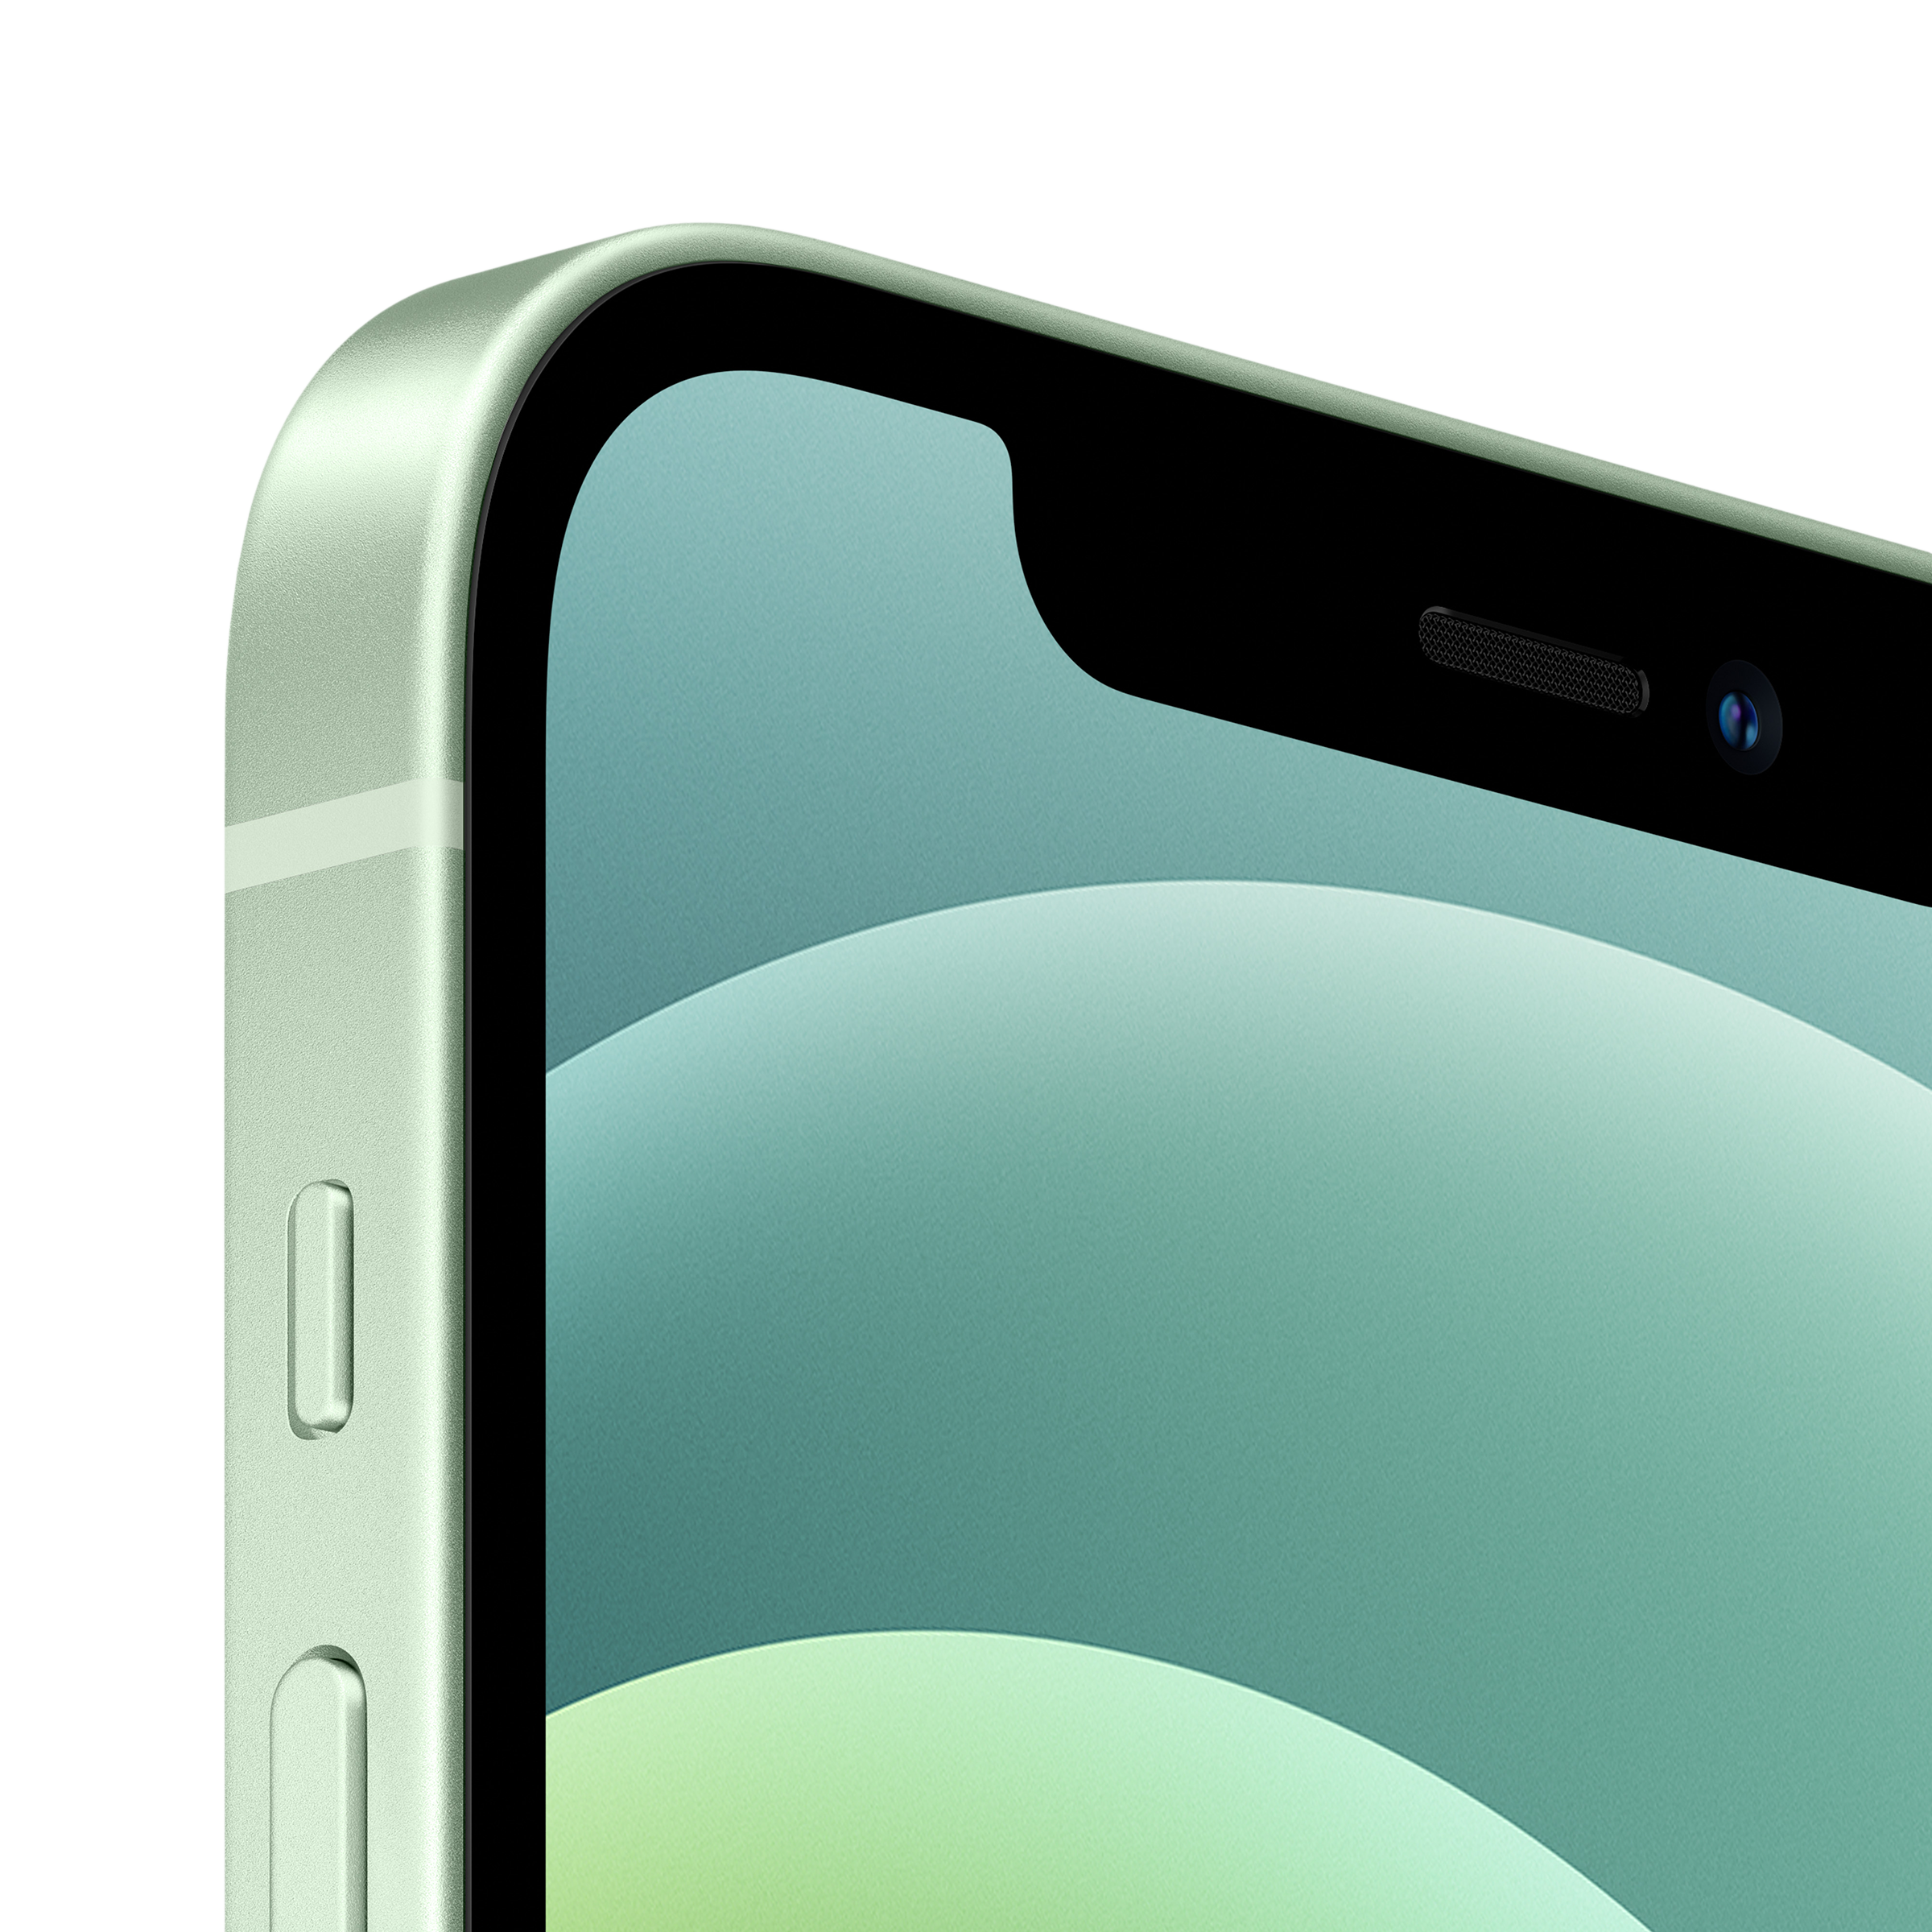 Buy Apple iPhone 13 (128GB, Alpine Green) Online - Croma